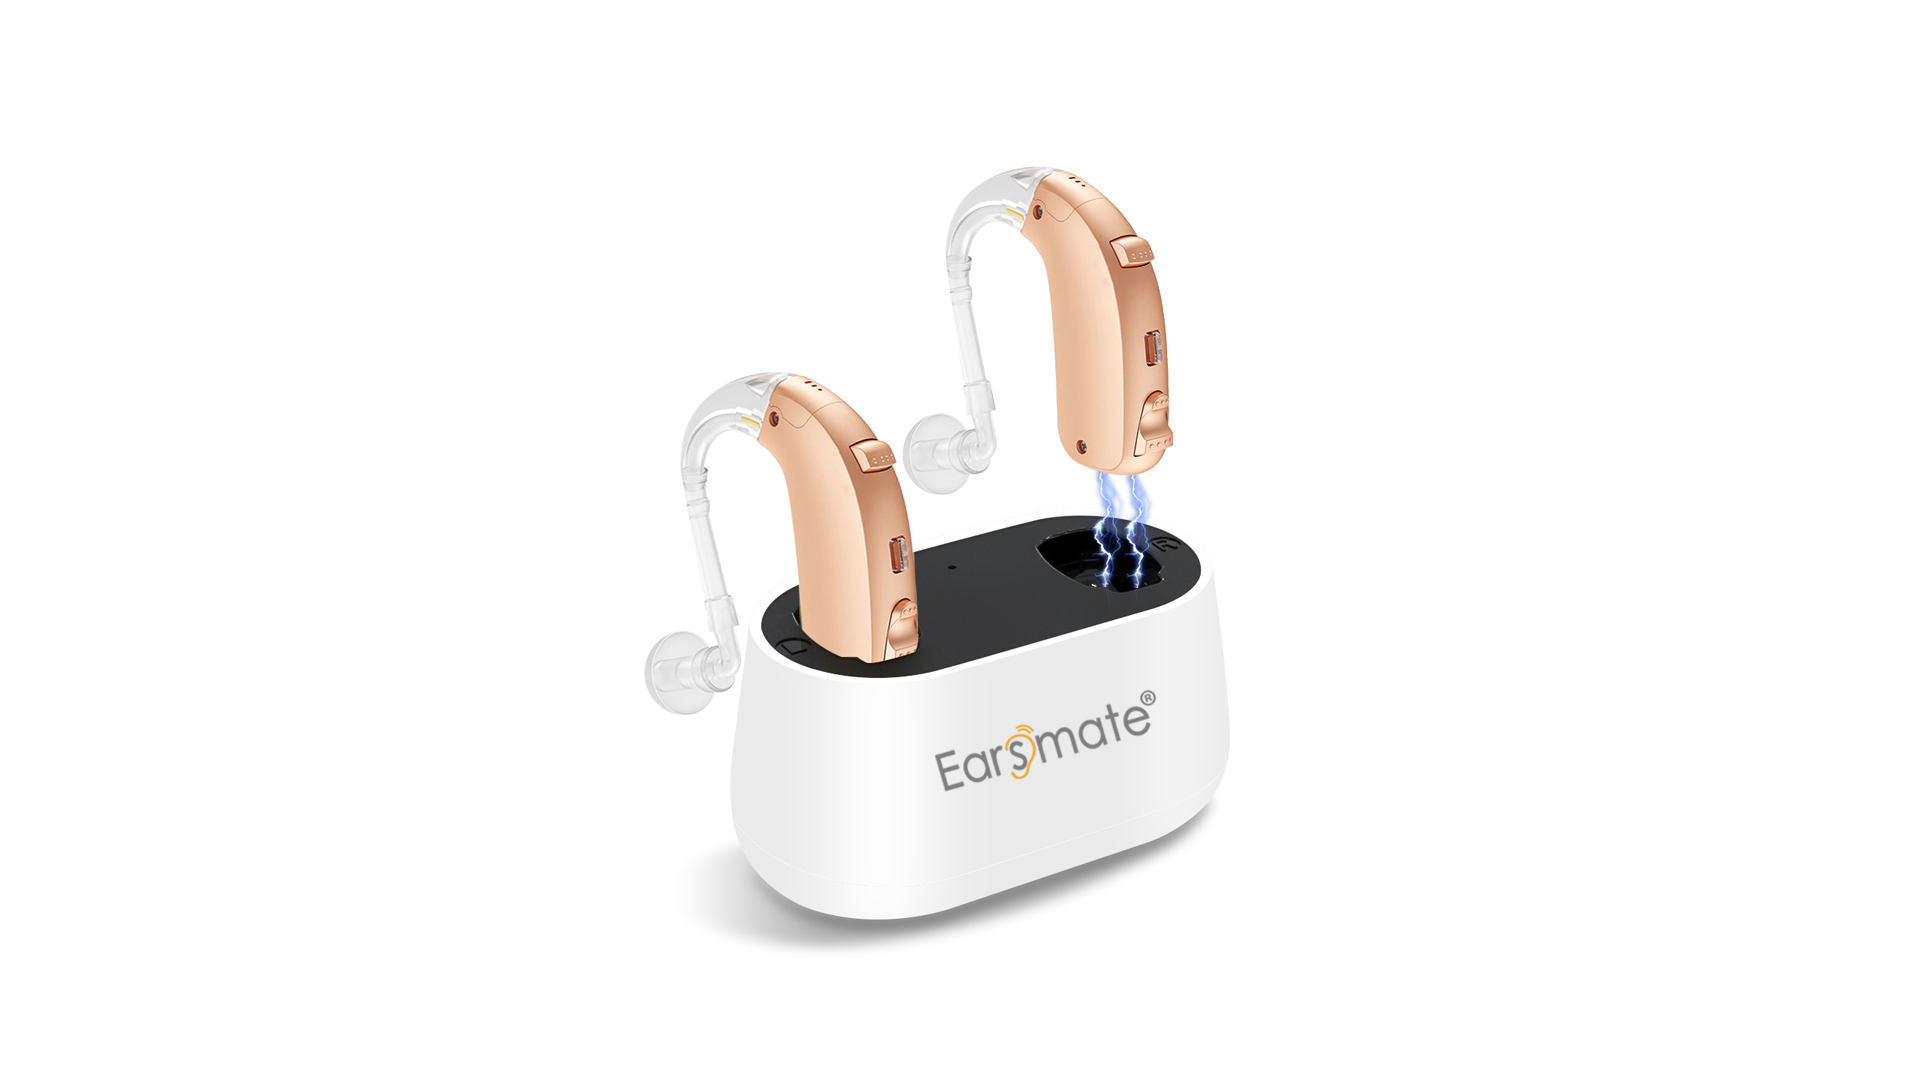 Advanced Rechargeable Digital Hearing Aid Earsmate G26+